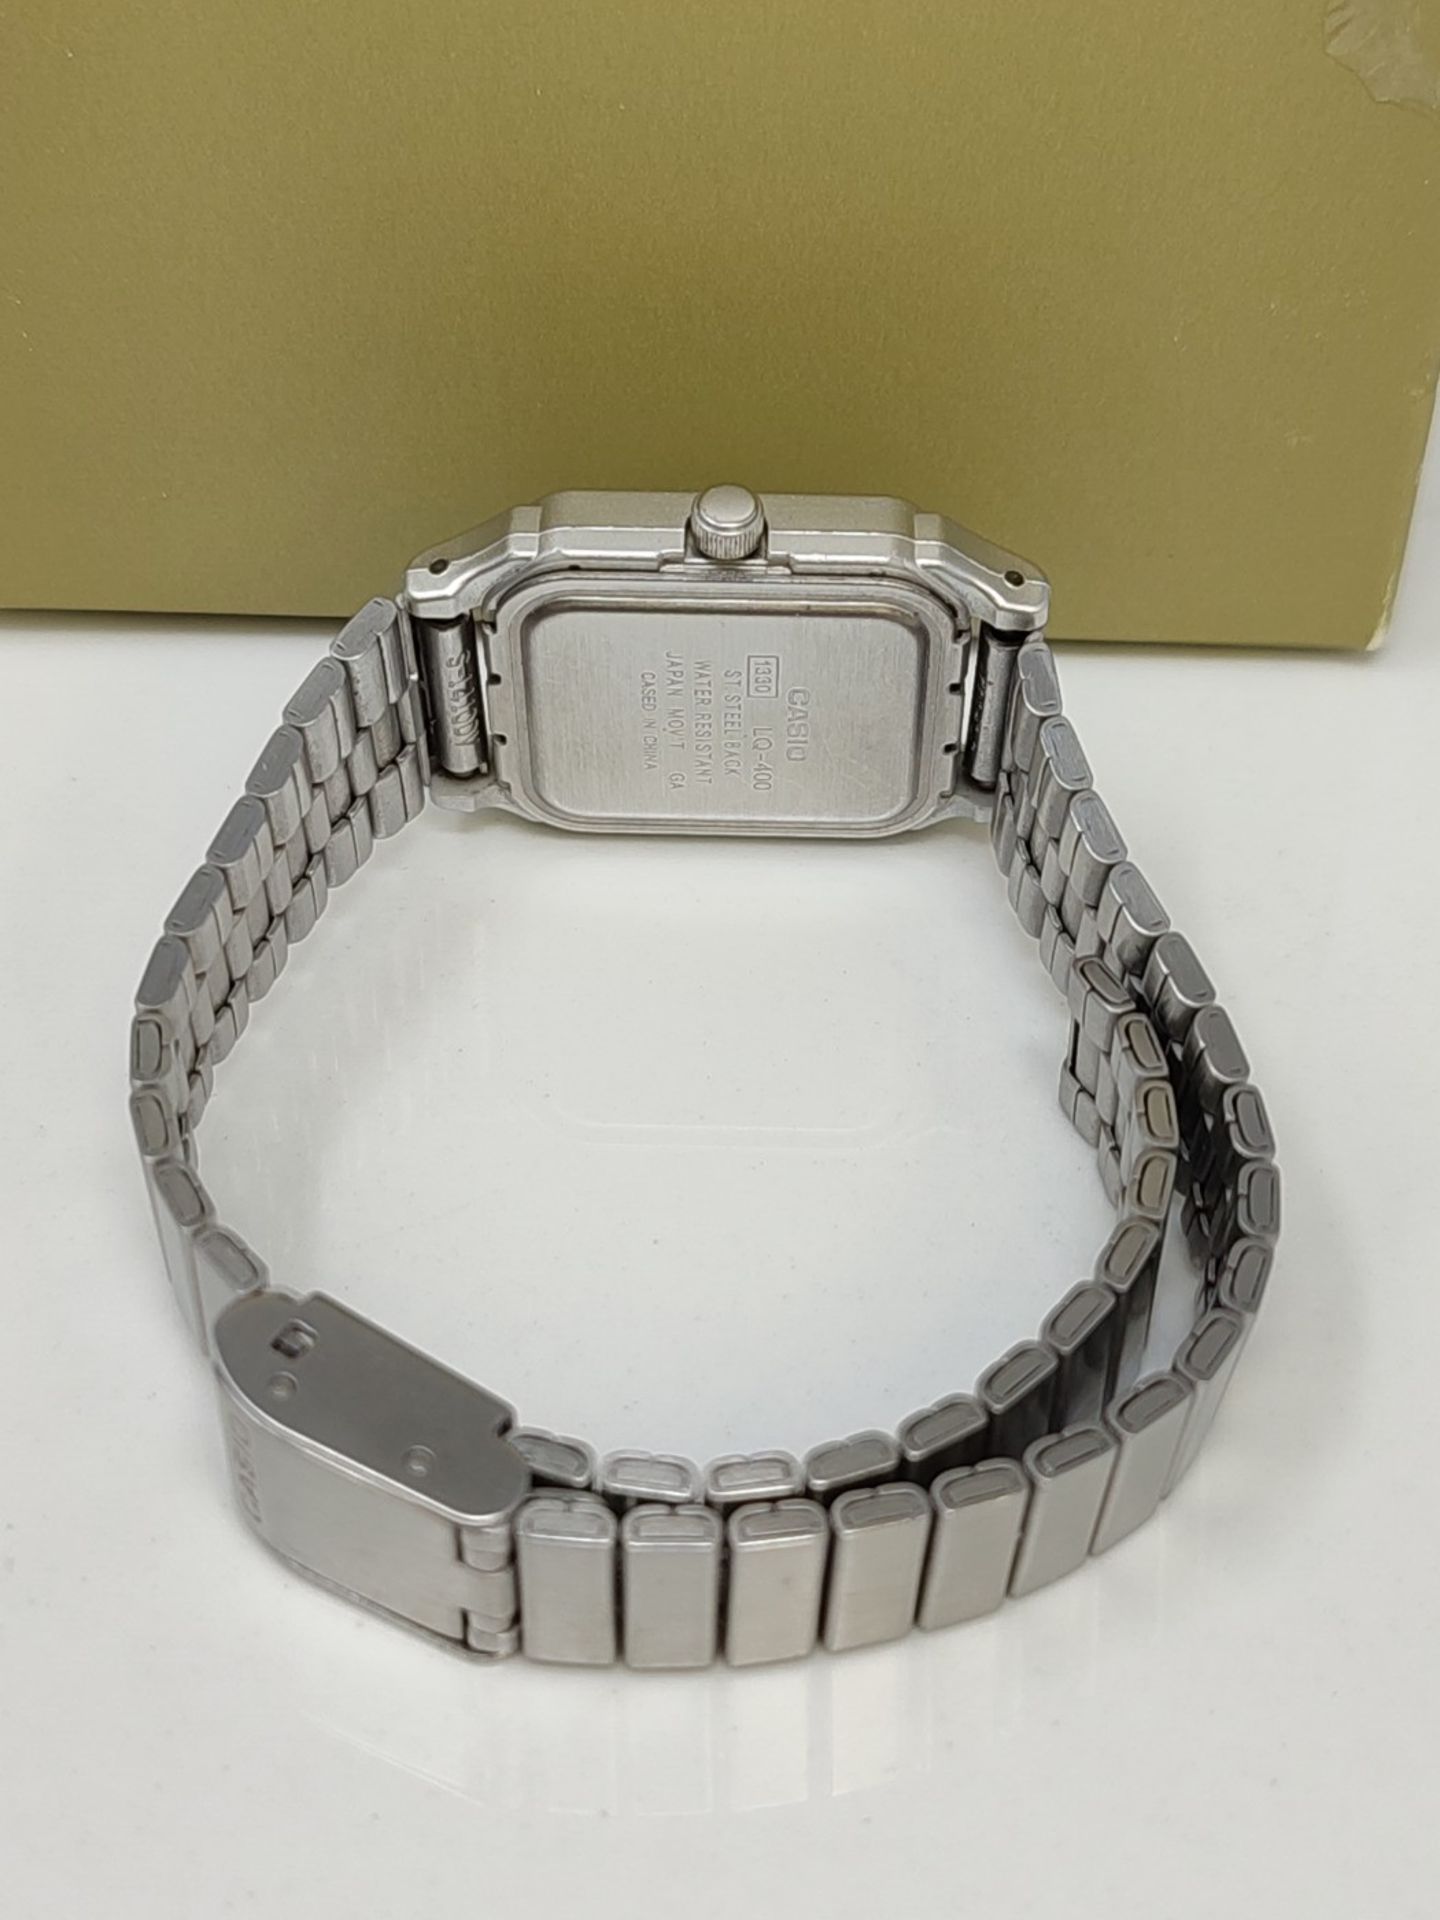 Casio Collection Women's Bracelet Watch LQ400D7AEF - Image 3 of 3